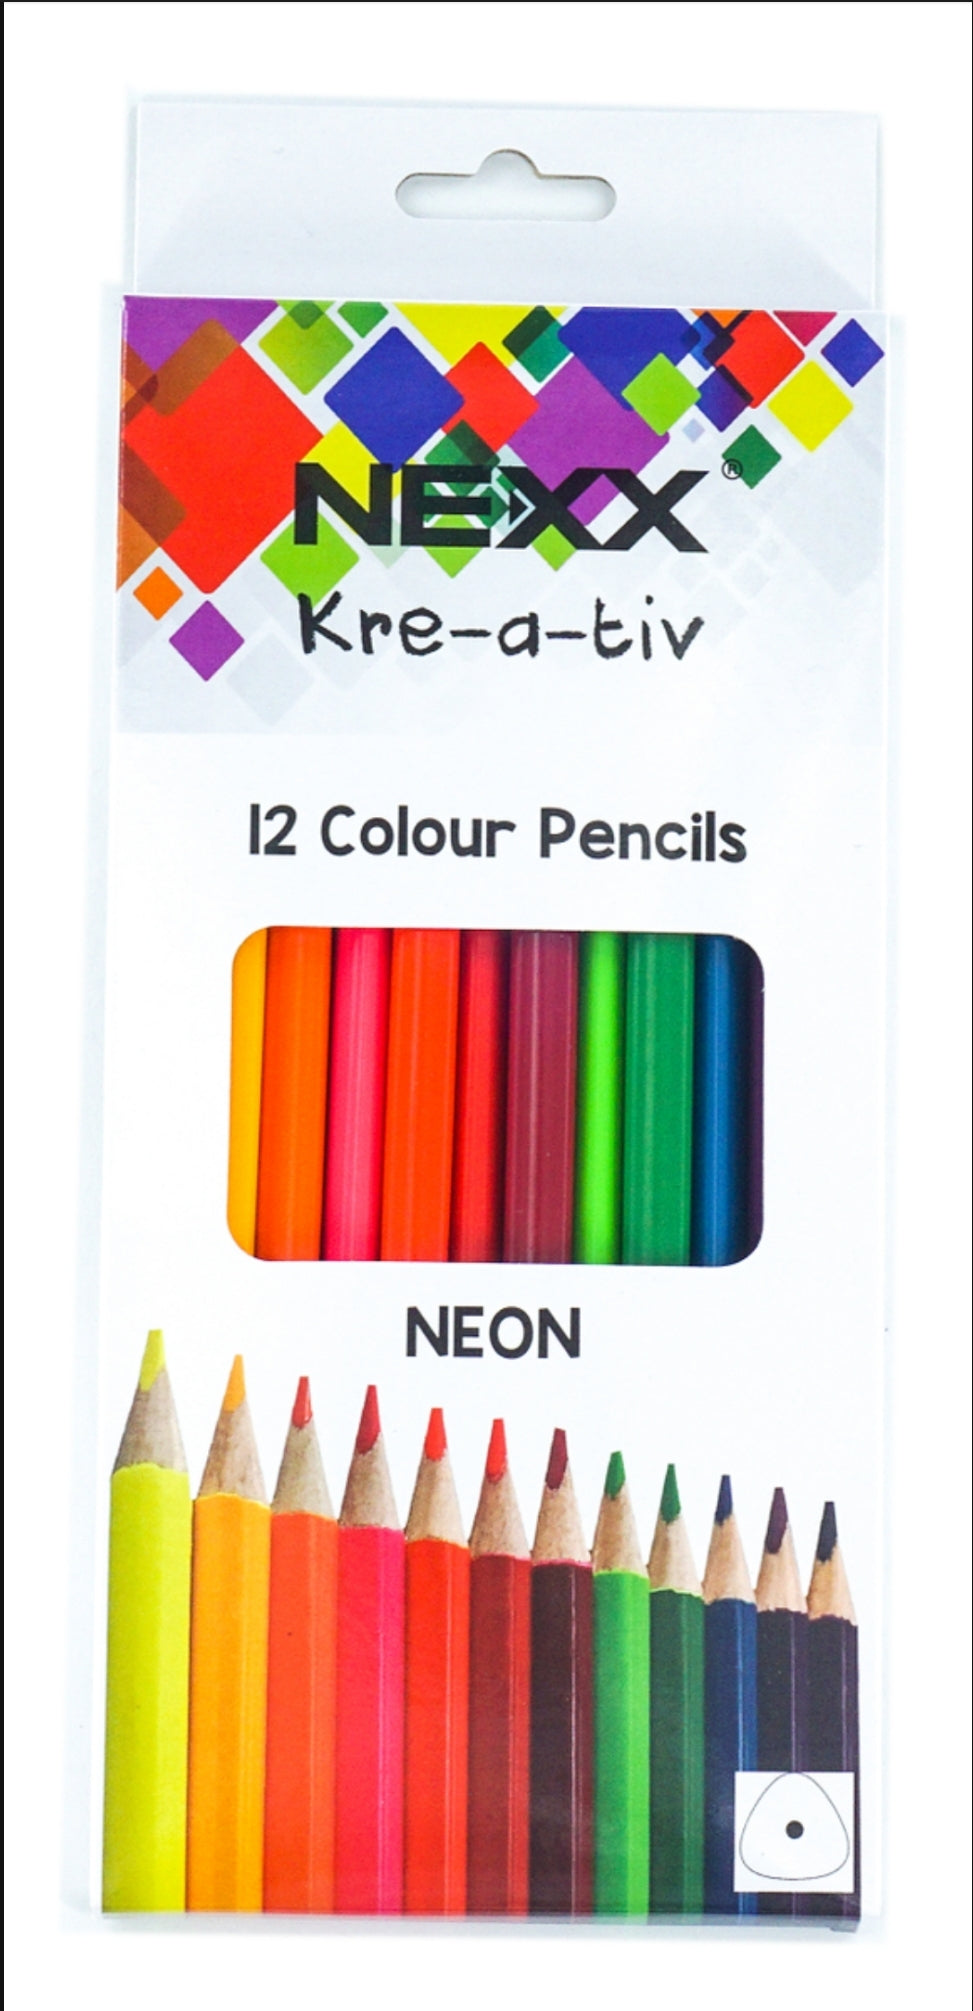 NEXX Kre-A-Tiv Neon Colour Pencils